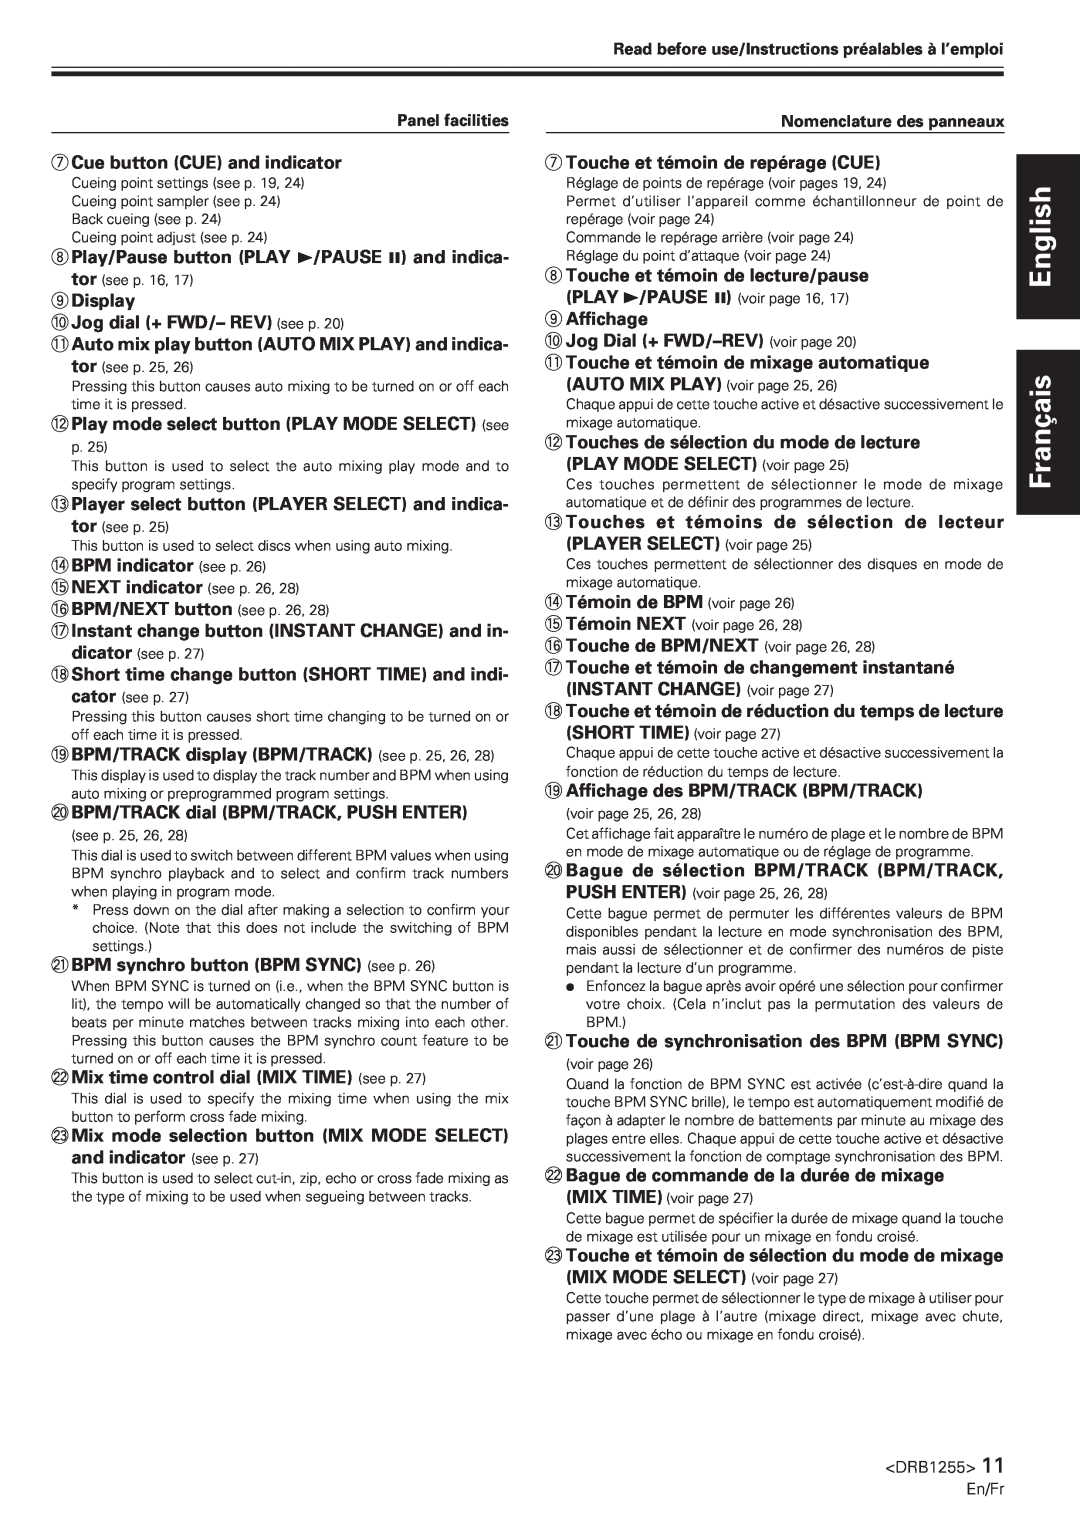 Pioneer CMX-5000 manual English Français 